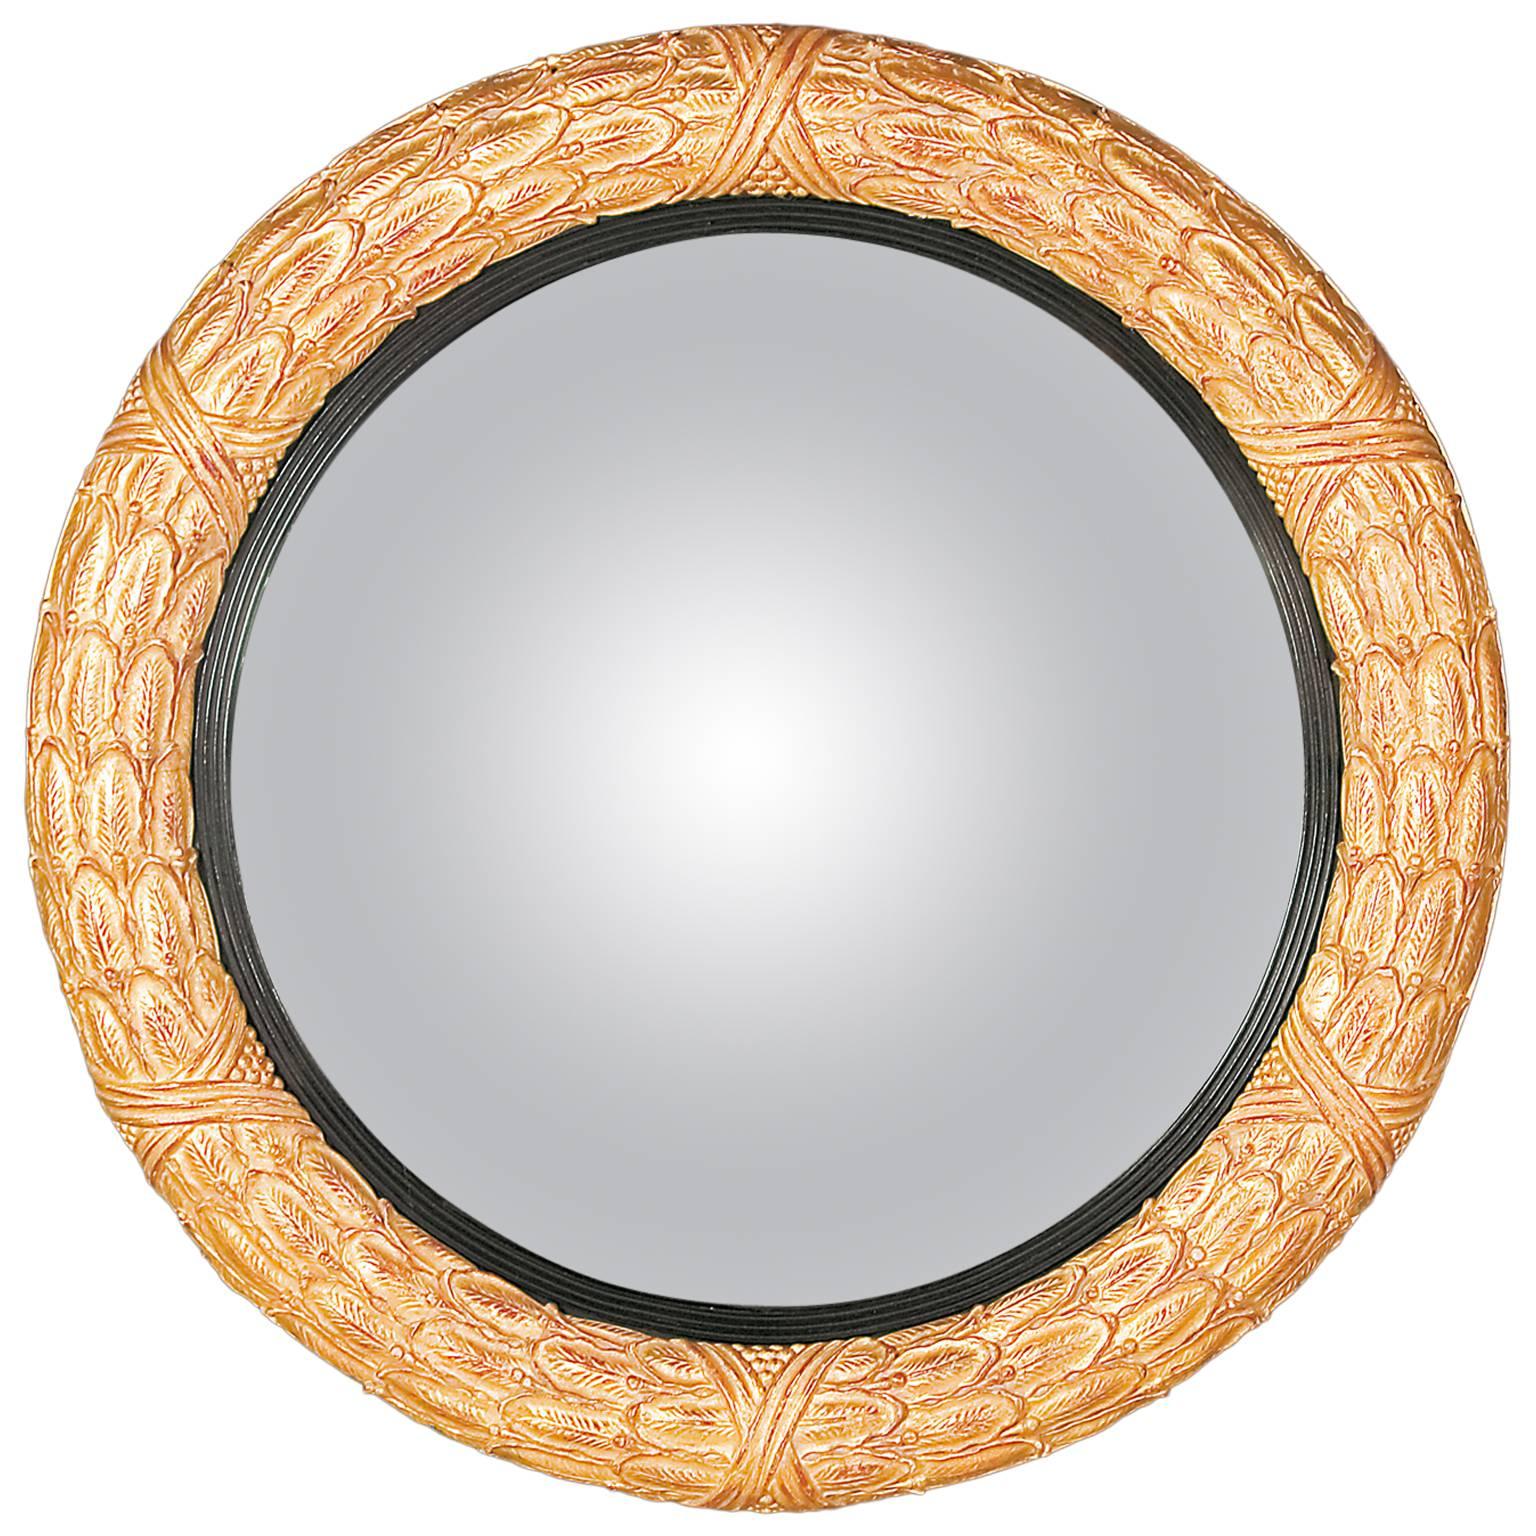 Laurel Convex Mirror in the Regency manner